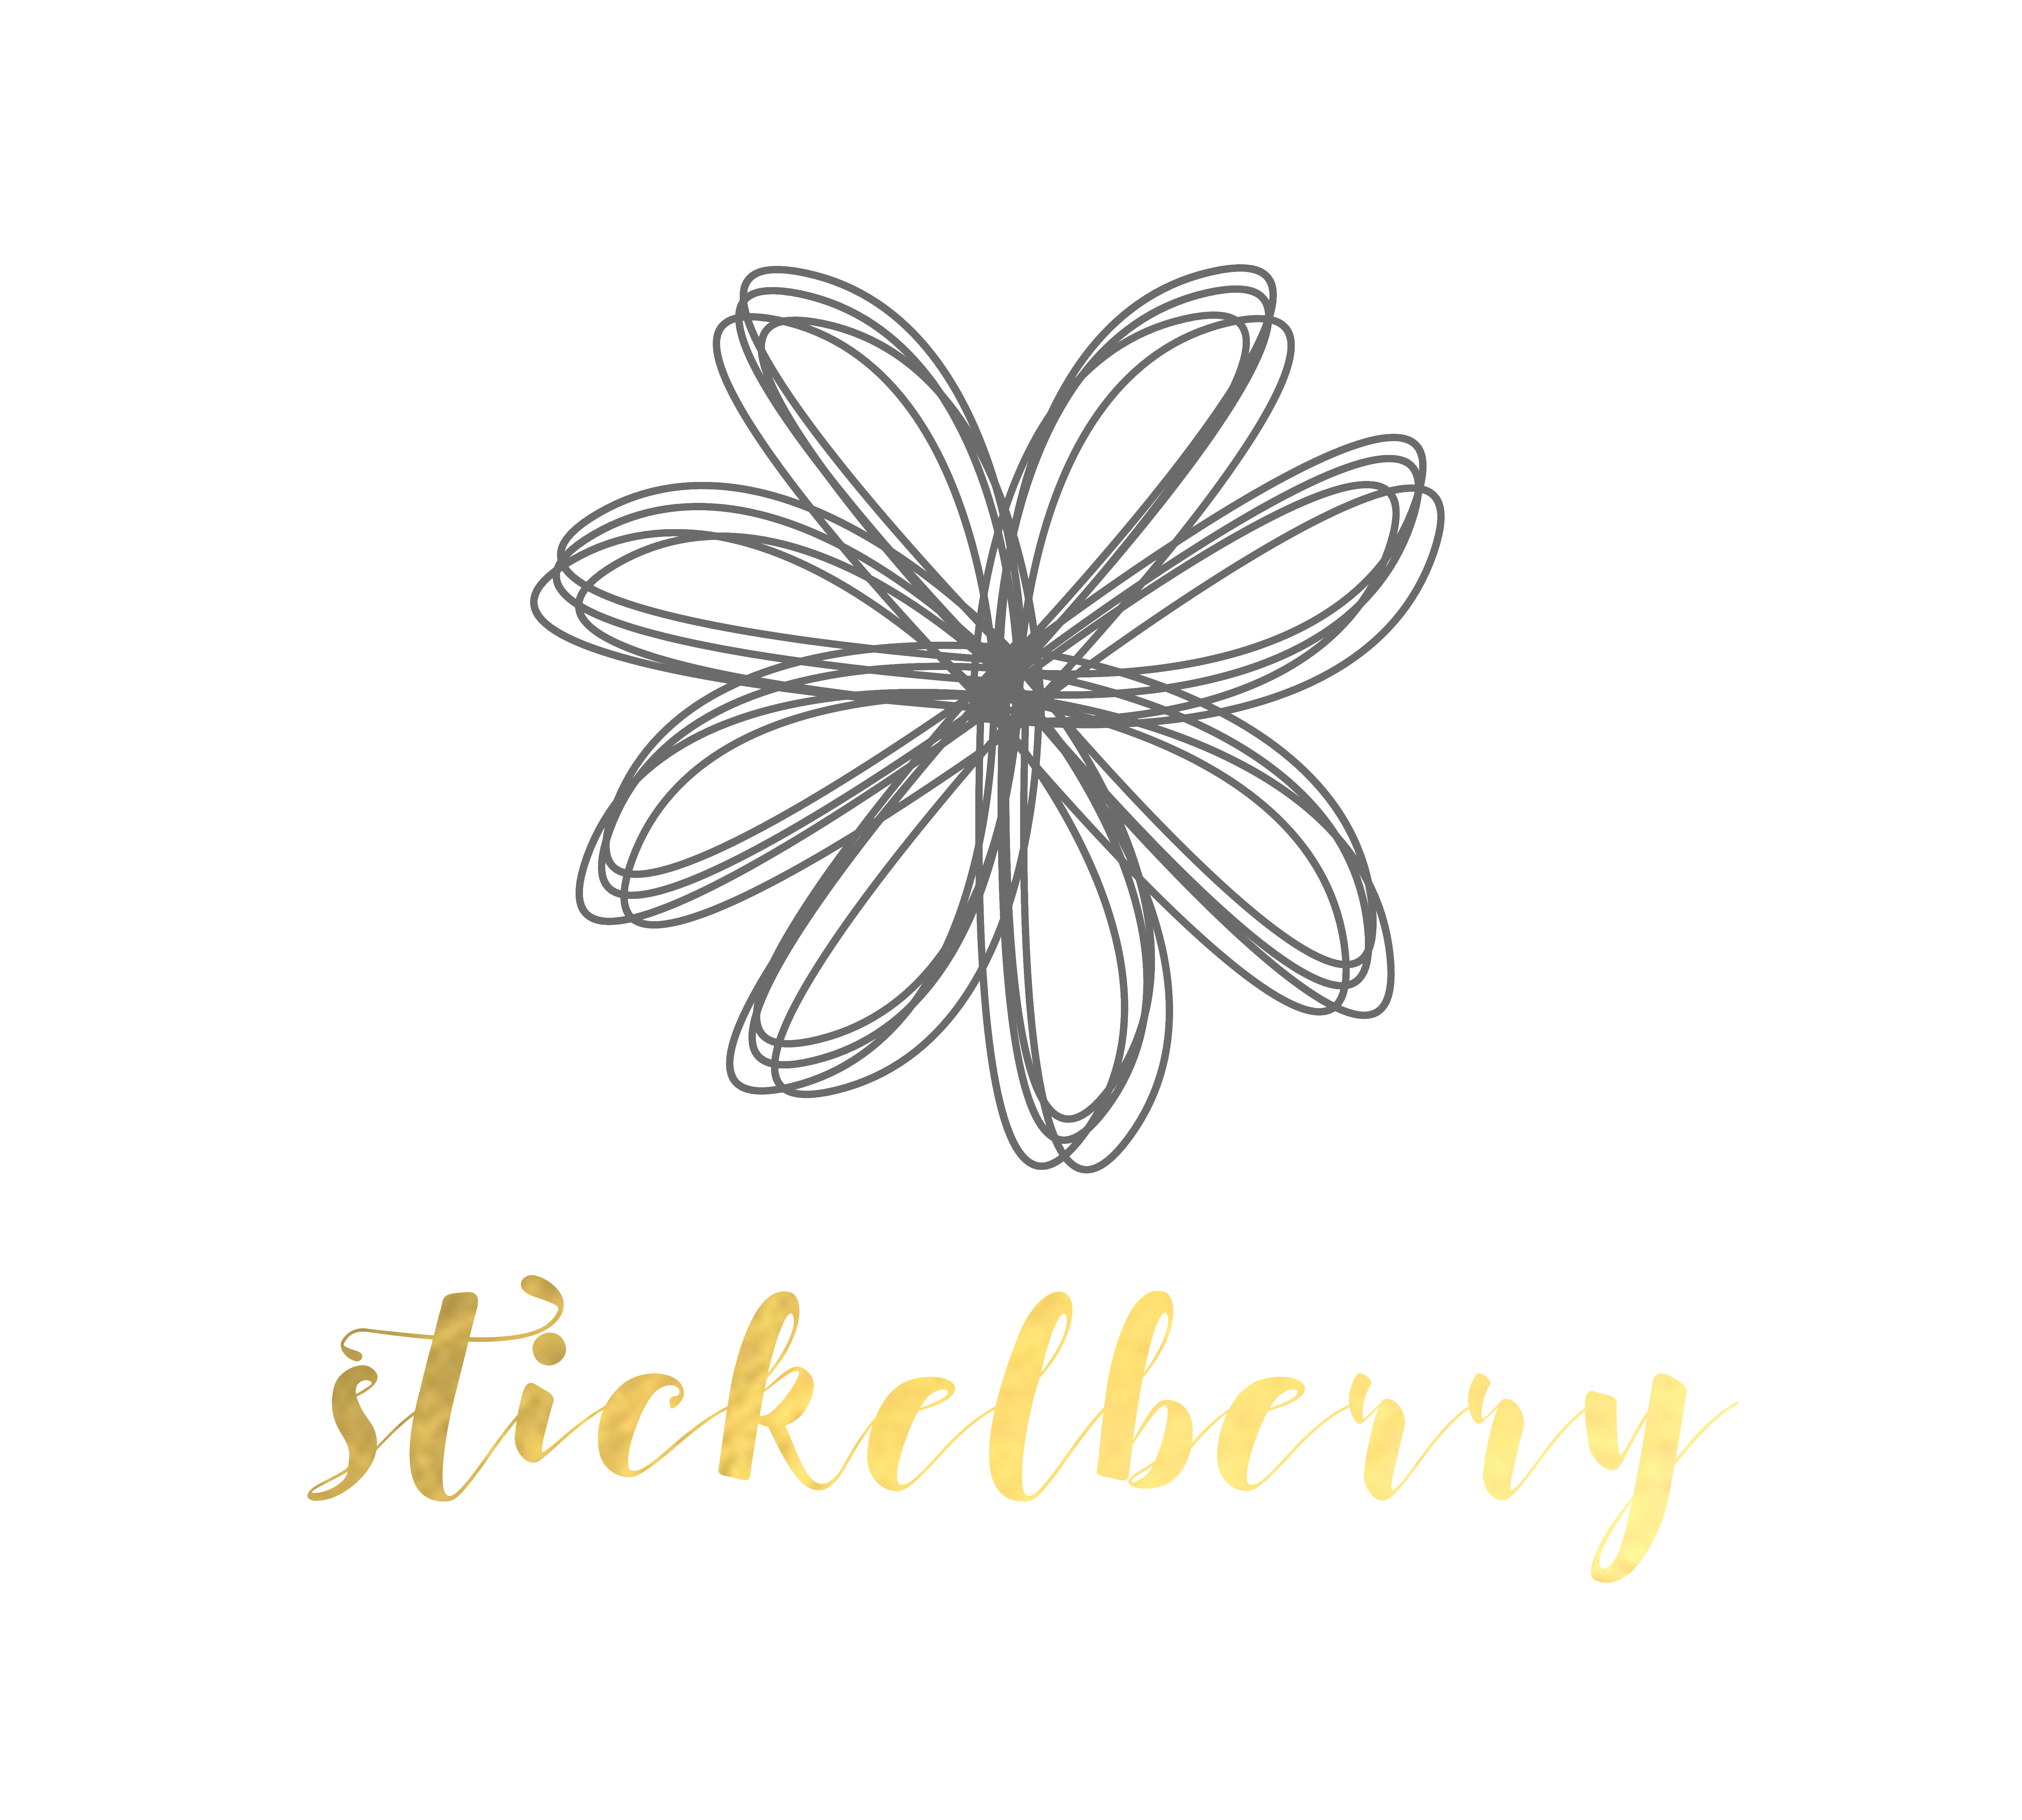 stickelberry